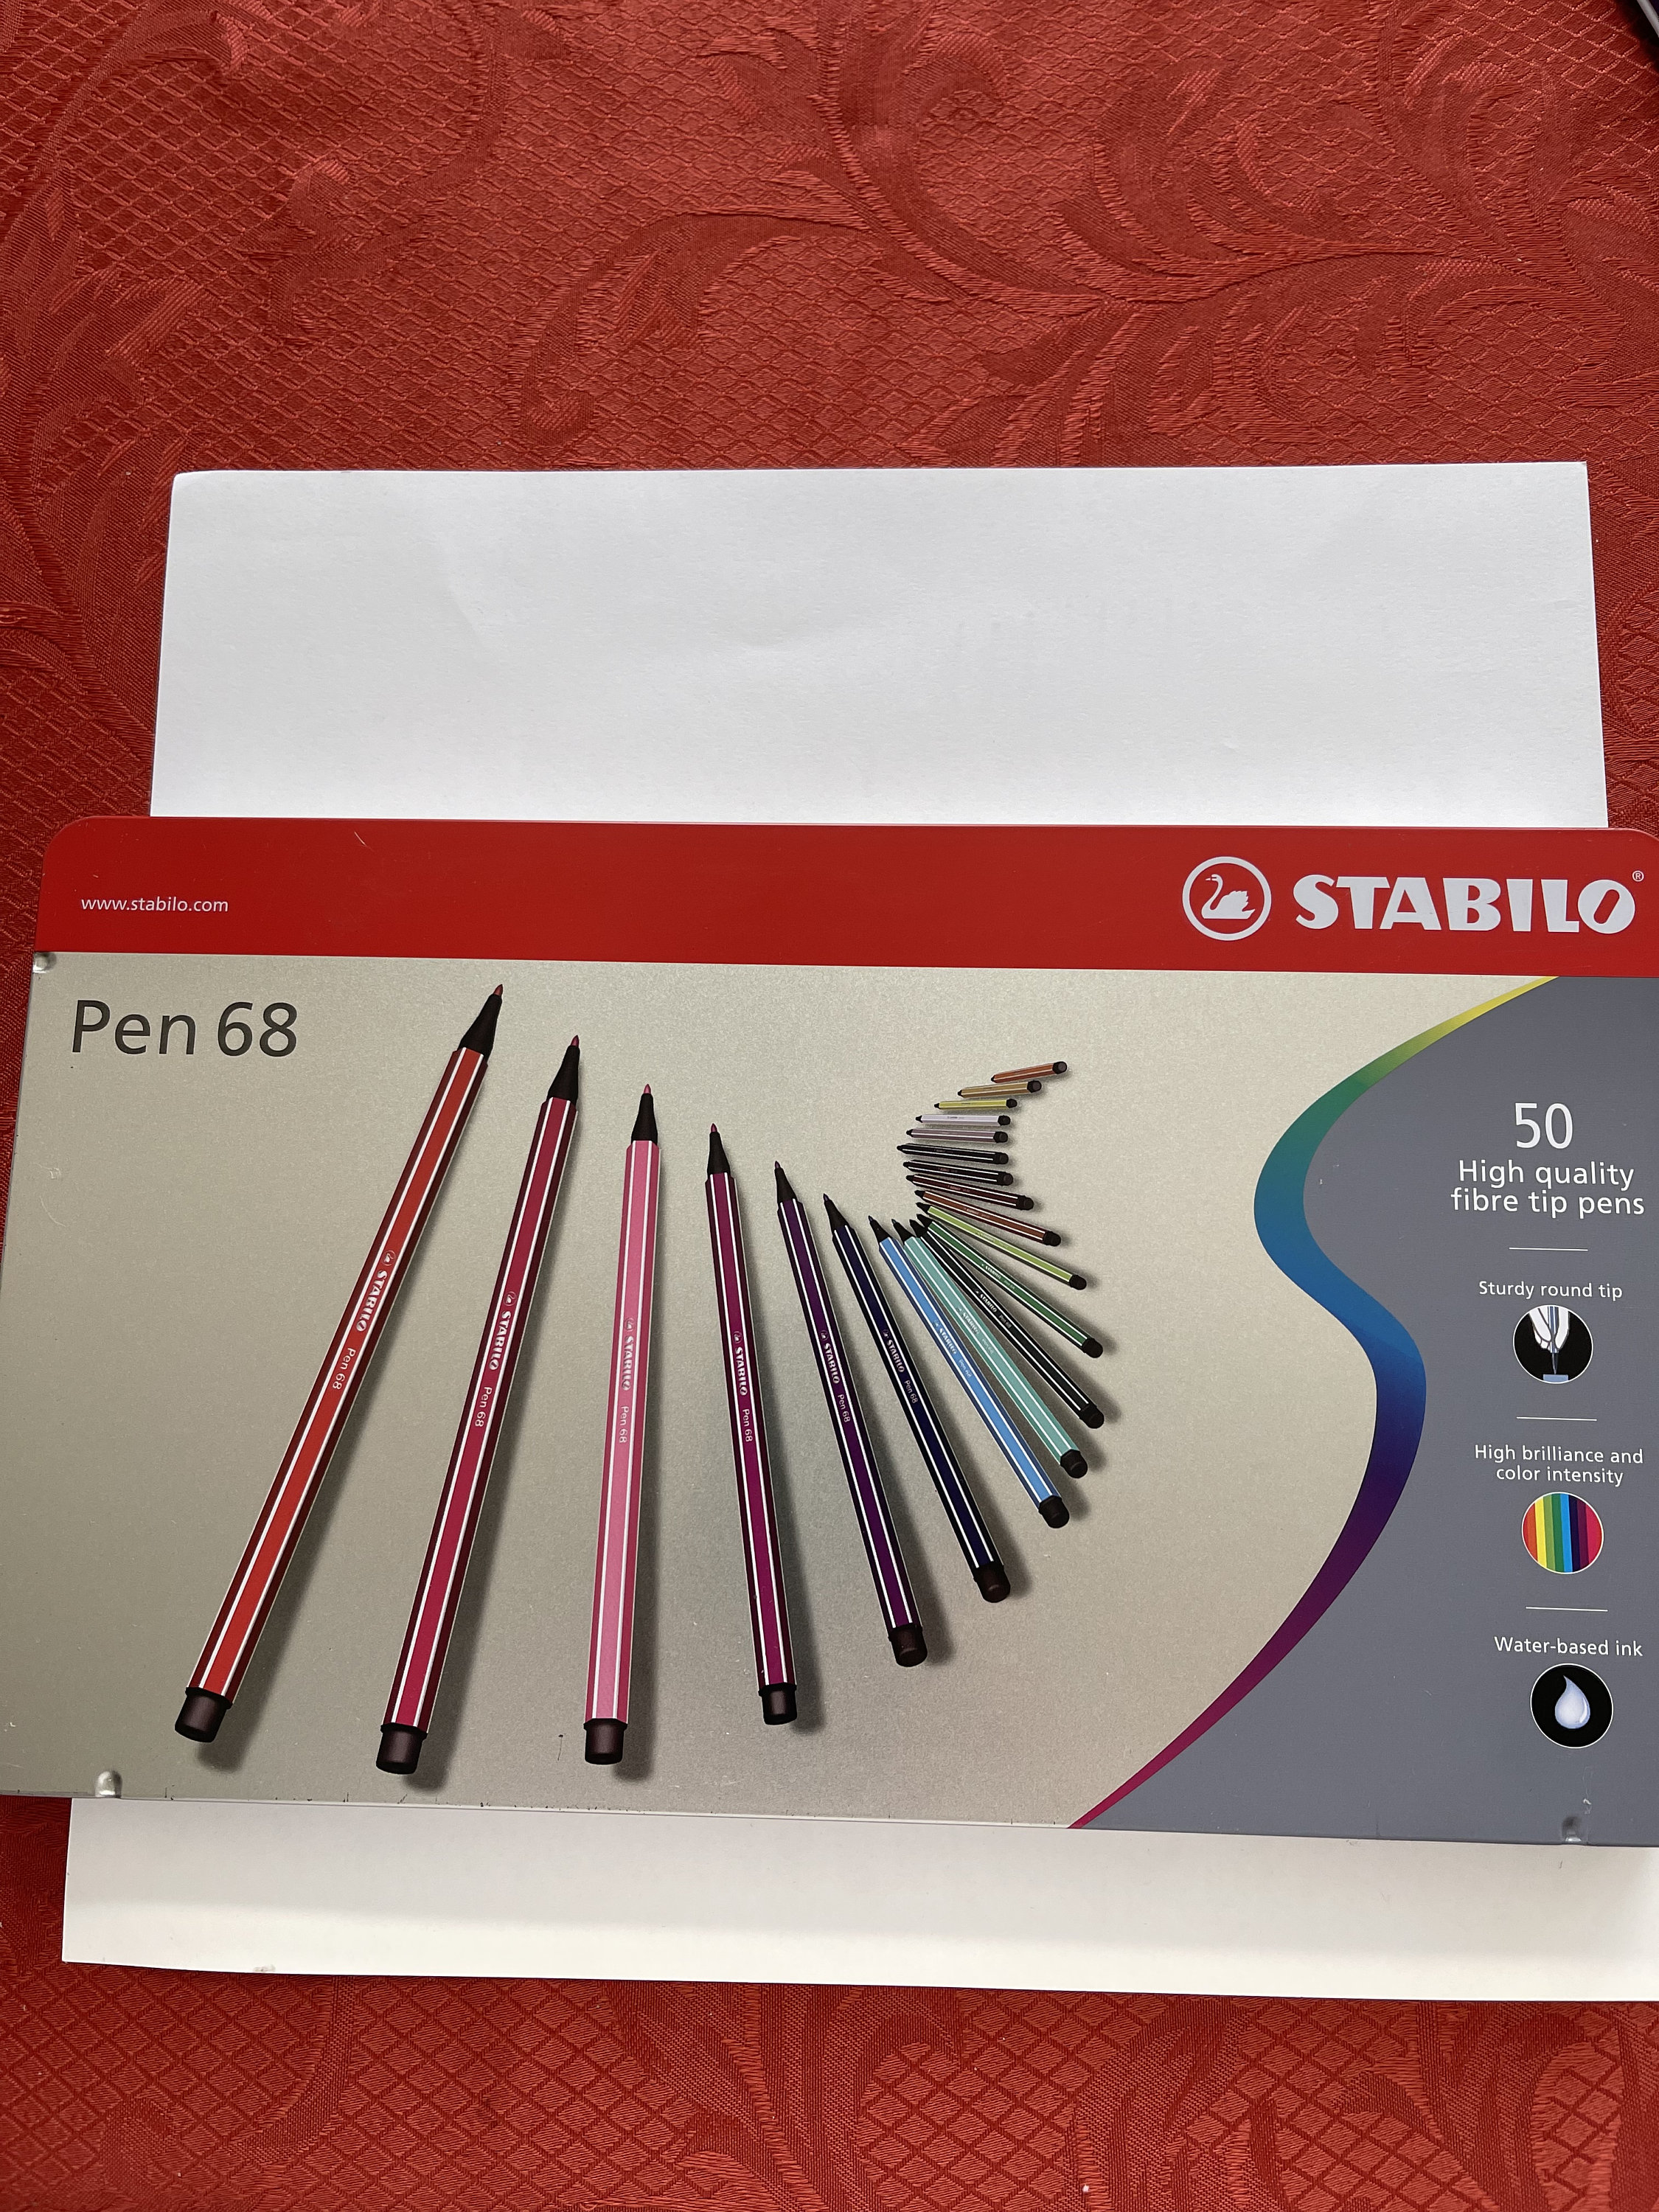 Premium Fibre-tip Pen STABILO Pen 68 Brush 1-3mm Nib Assorted Colours Tin  of 15 Ideal for Calligraphy, Scrapbooking, Journaling 